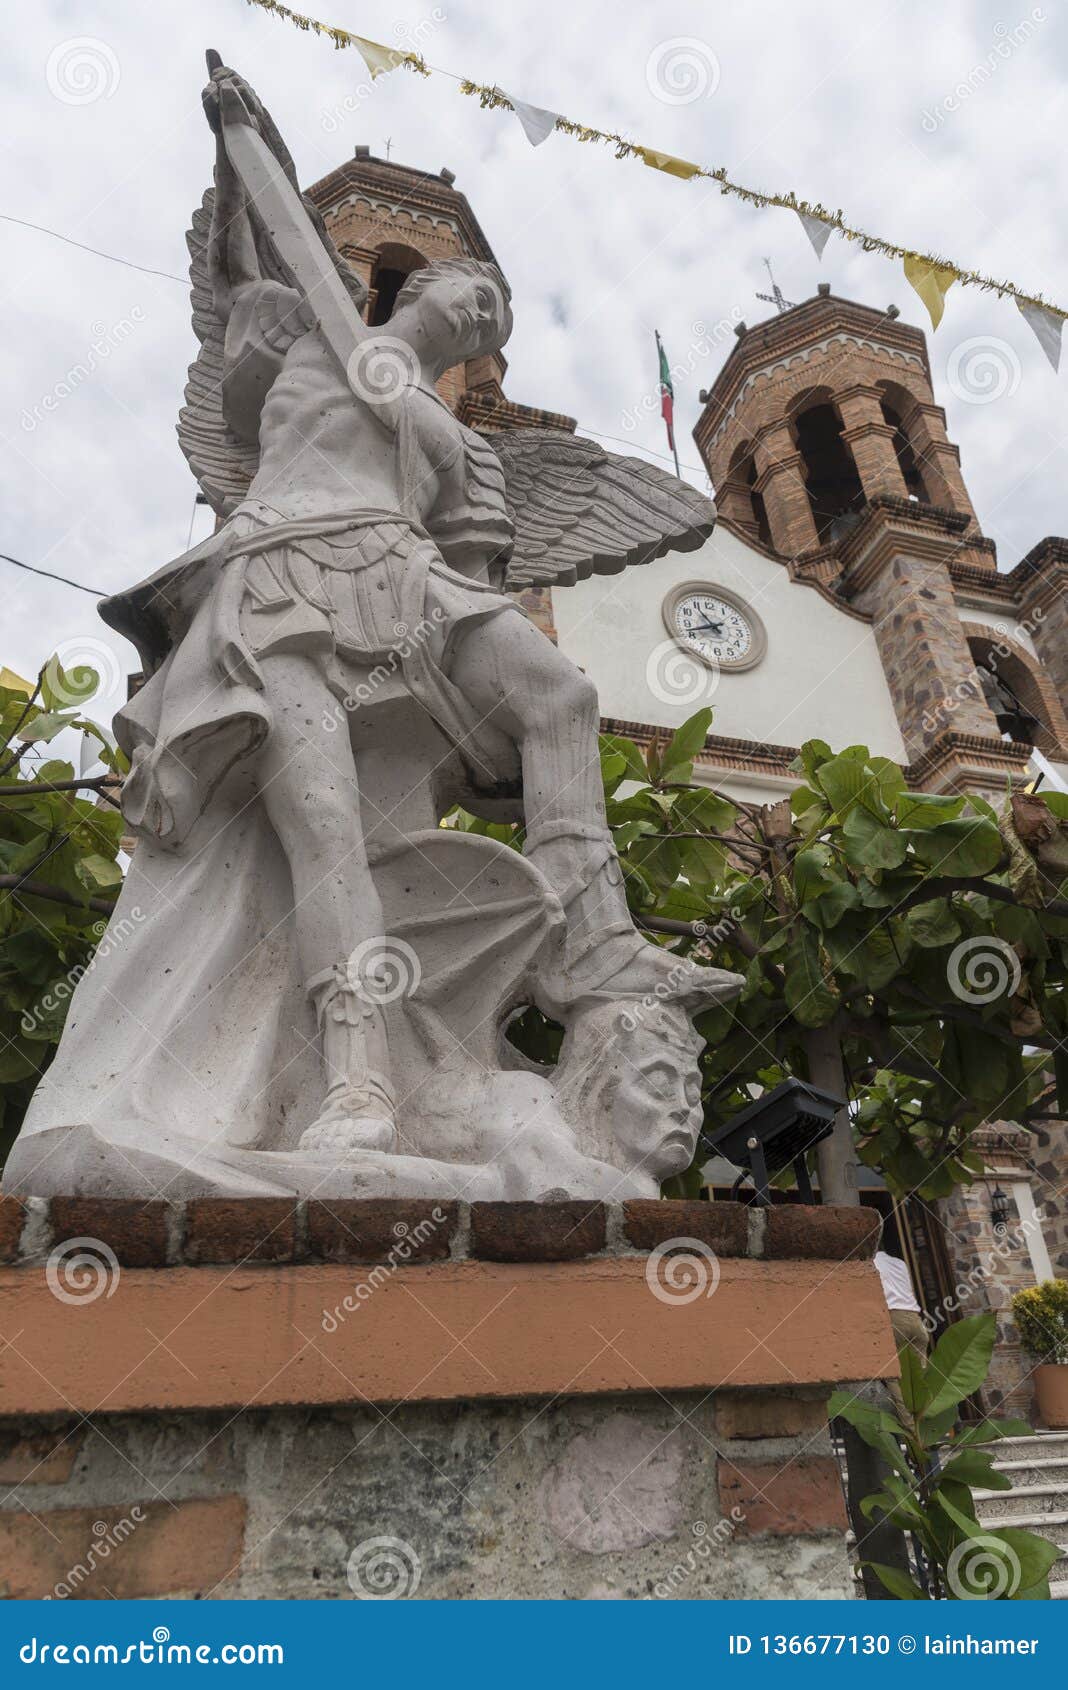 religious statue outside the parroquia de san miguel arcangel pitillal puerto vallarta